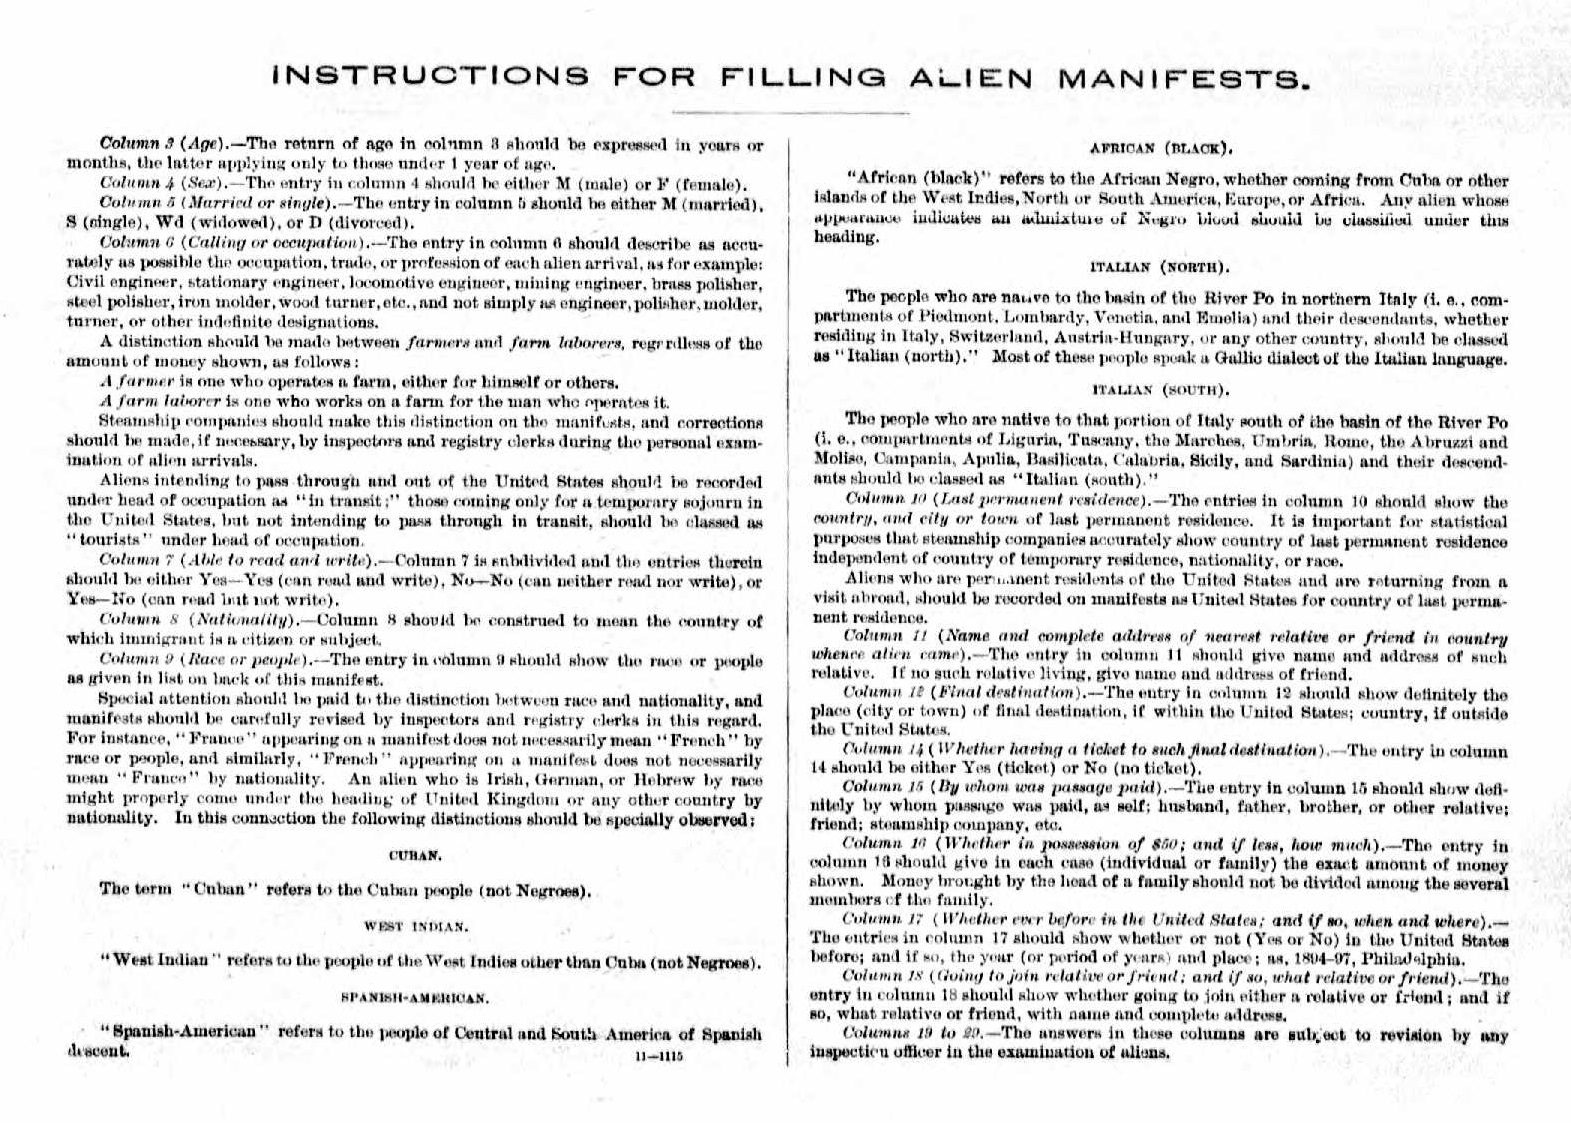 1908 Manifest